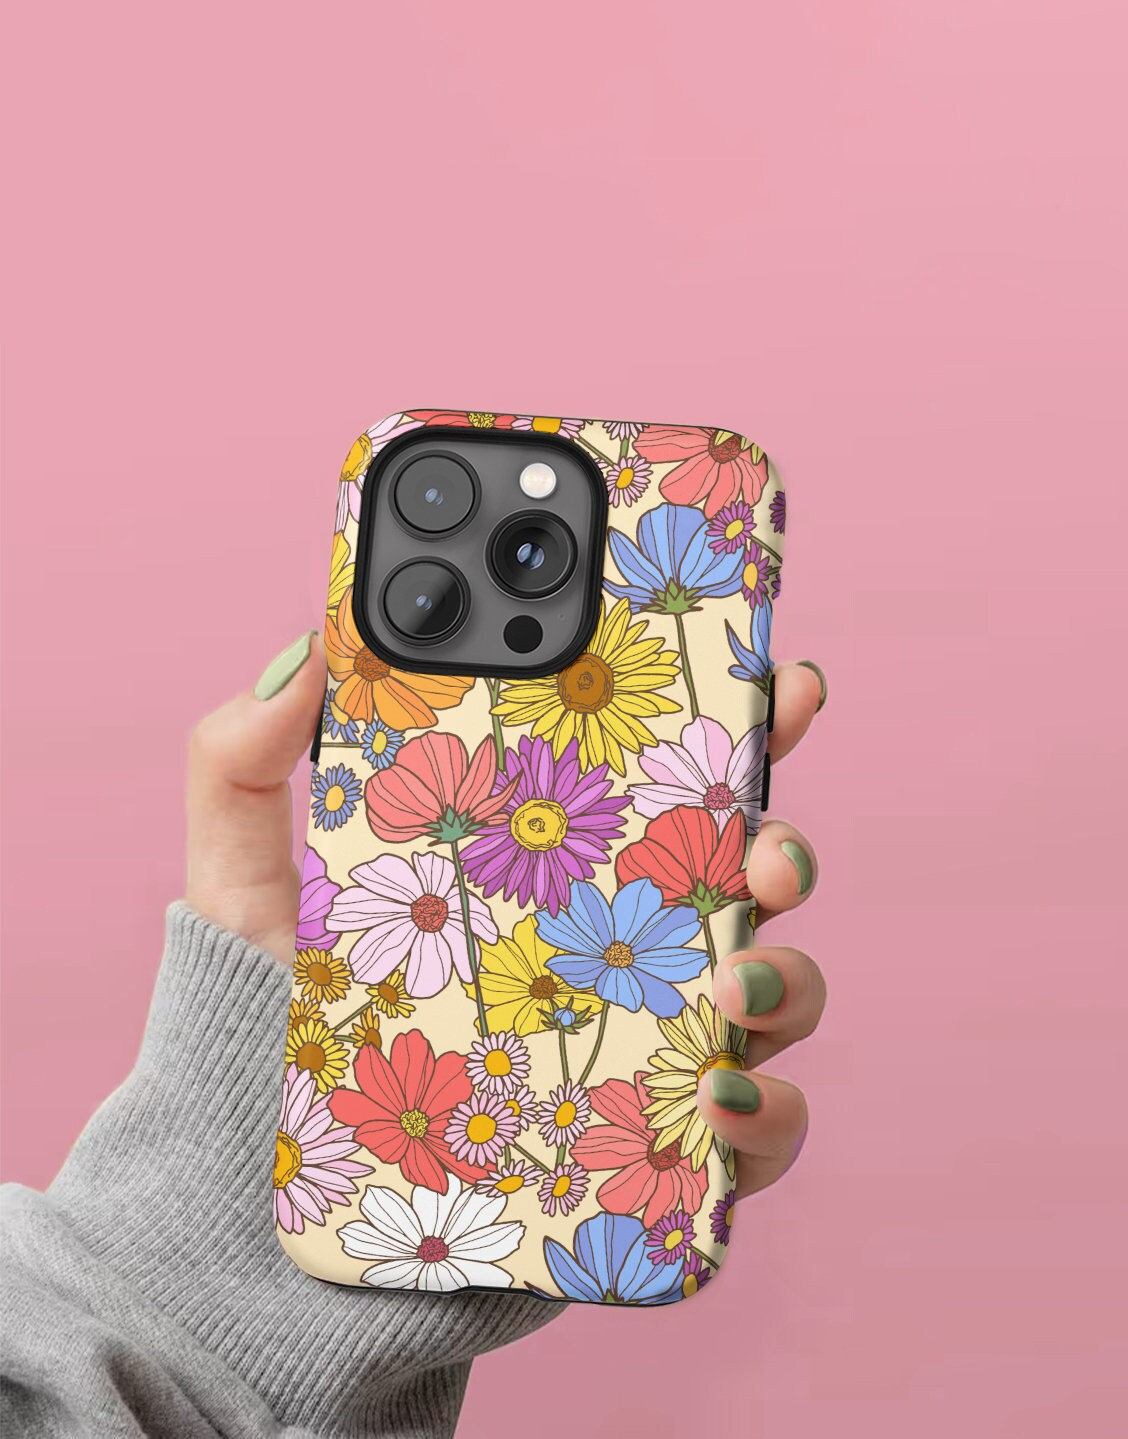 Y2K Flower Retro iPhone Case - Groovy Hippie Design - Fits iPhone